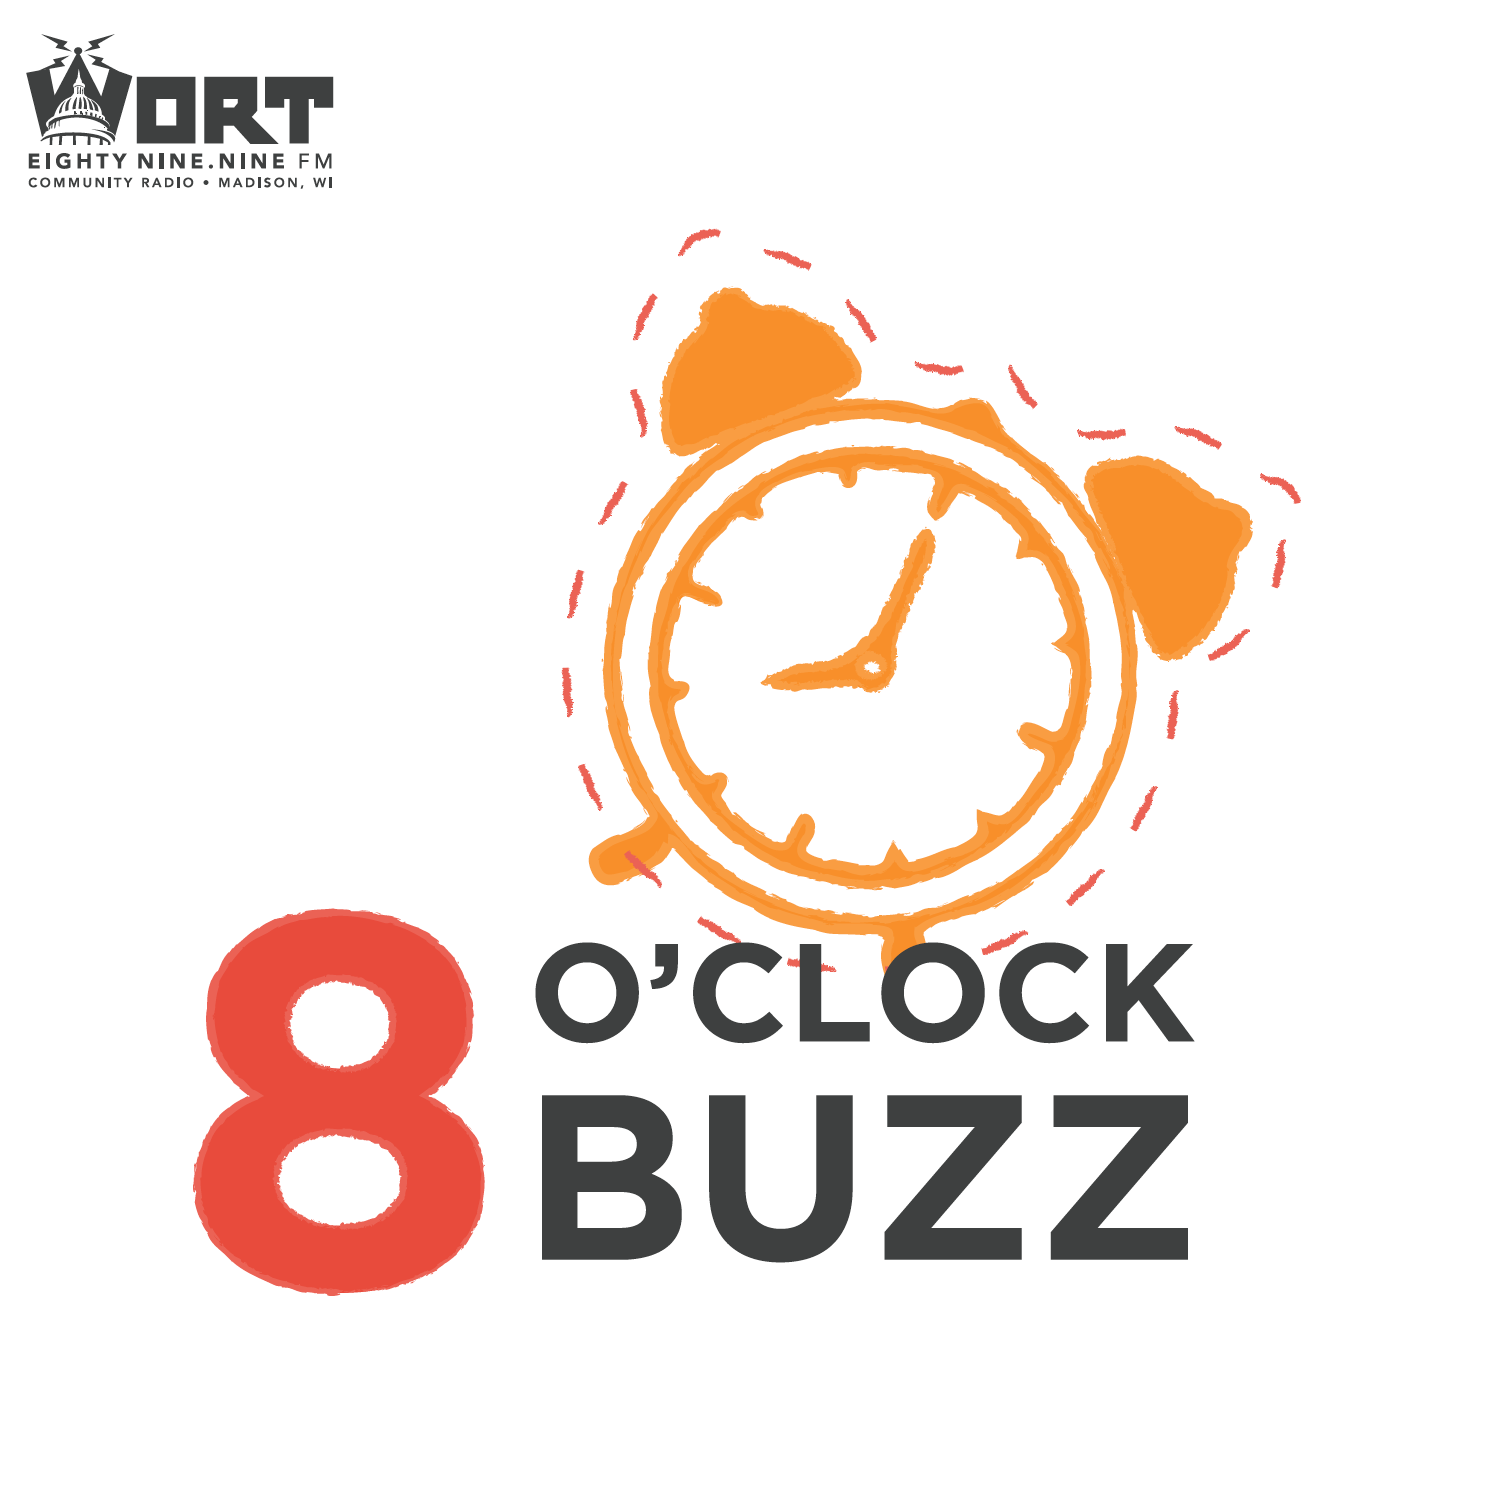 TAM statement featured on WORT’s 8 O’Clock Buzz